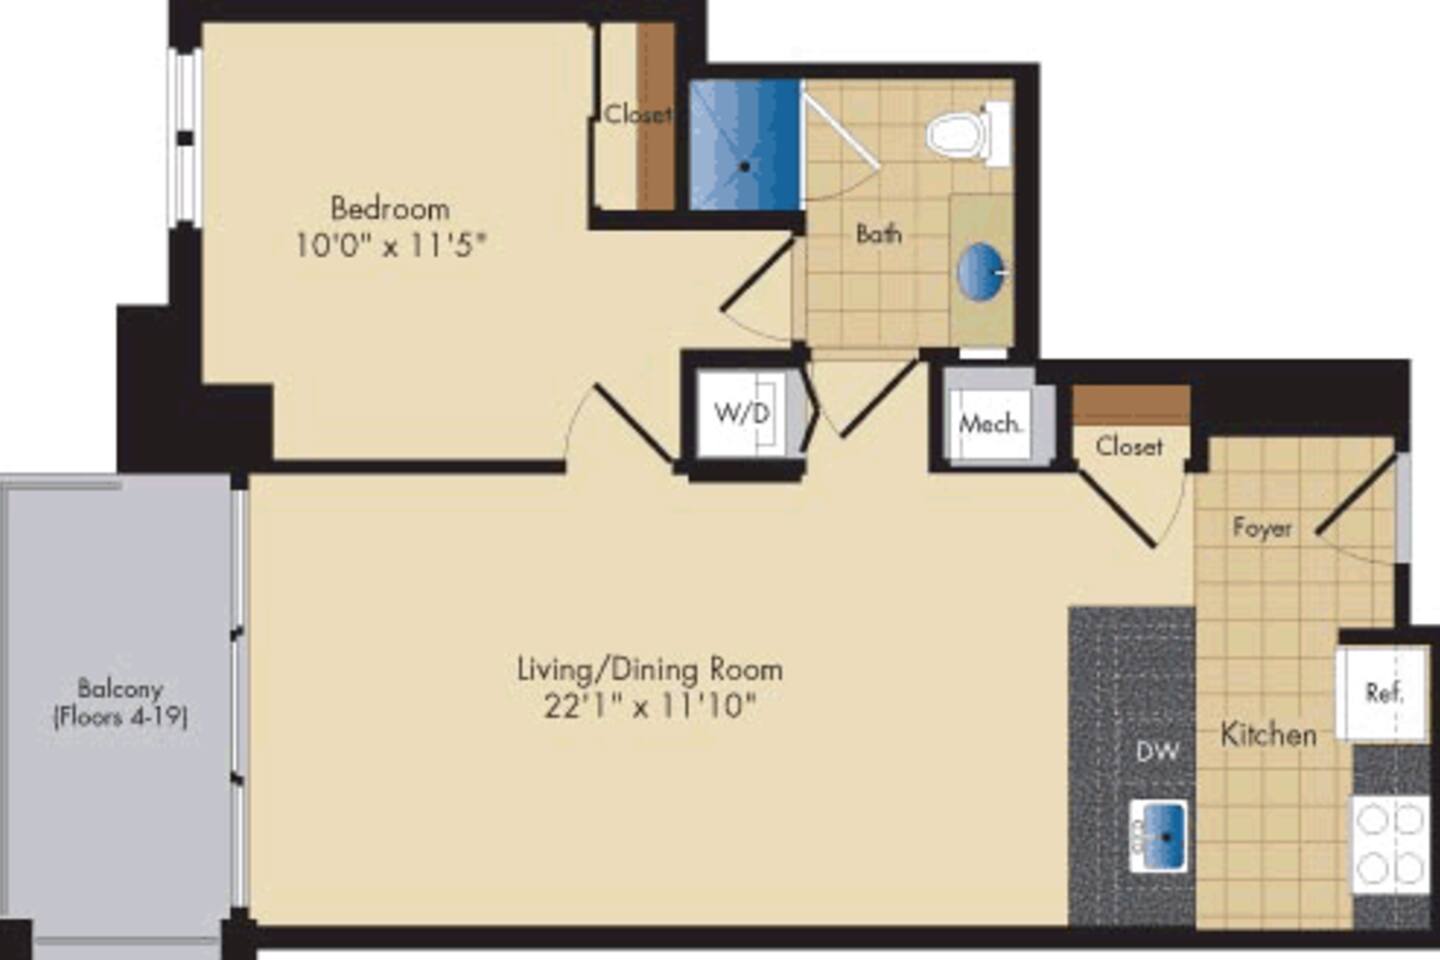 Floorplan diagram for Pollard, showing 1 bedroom